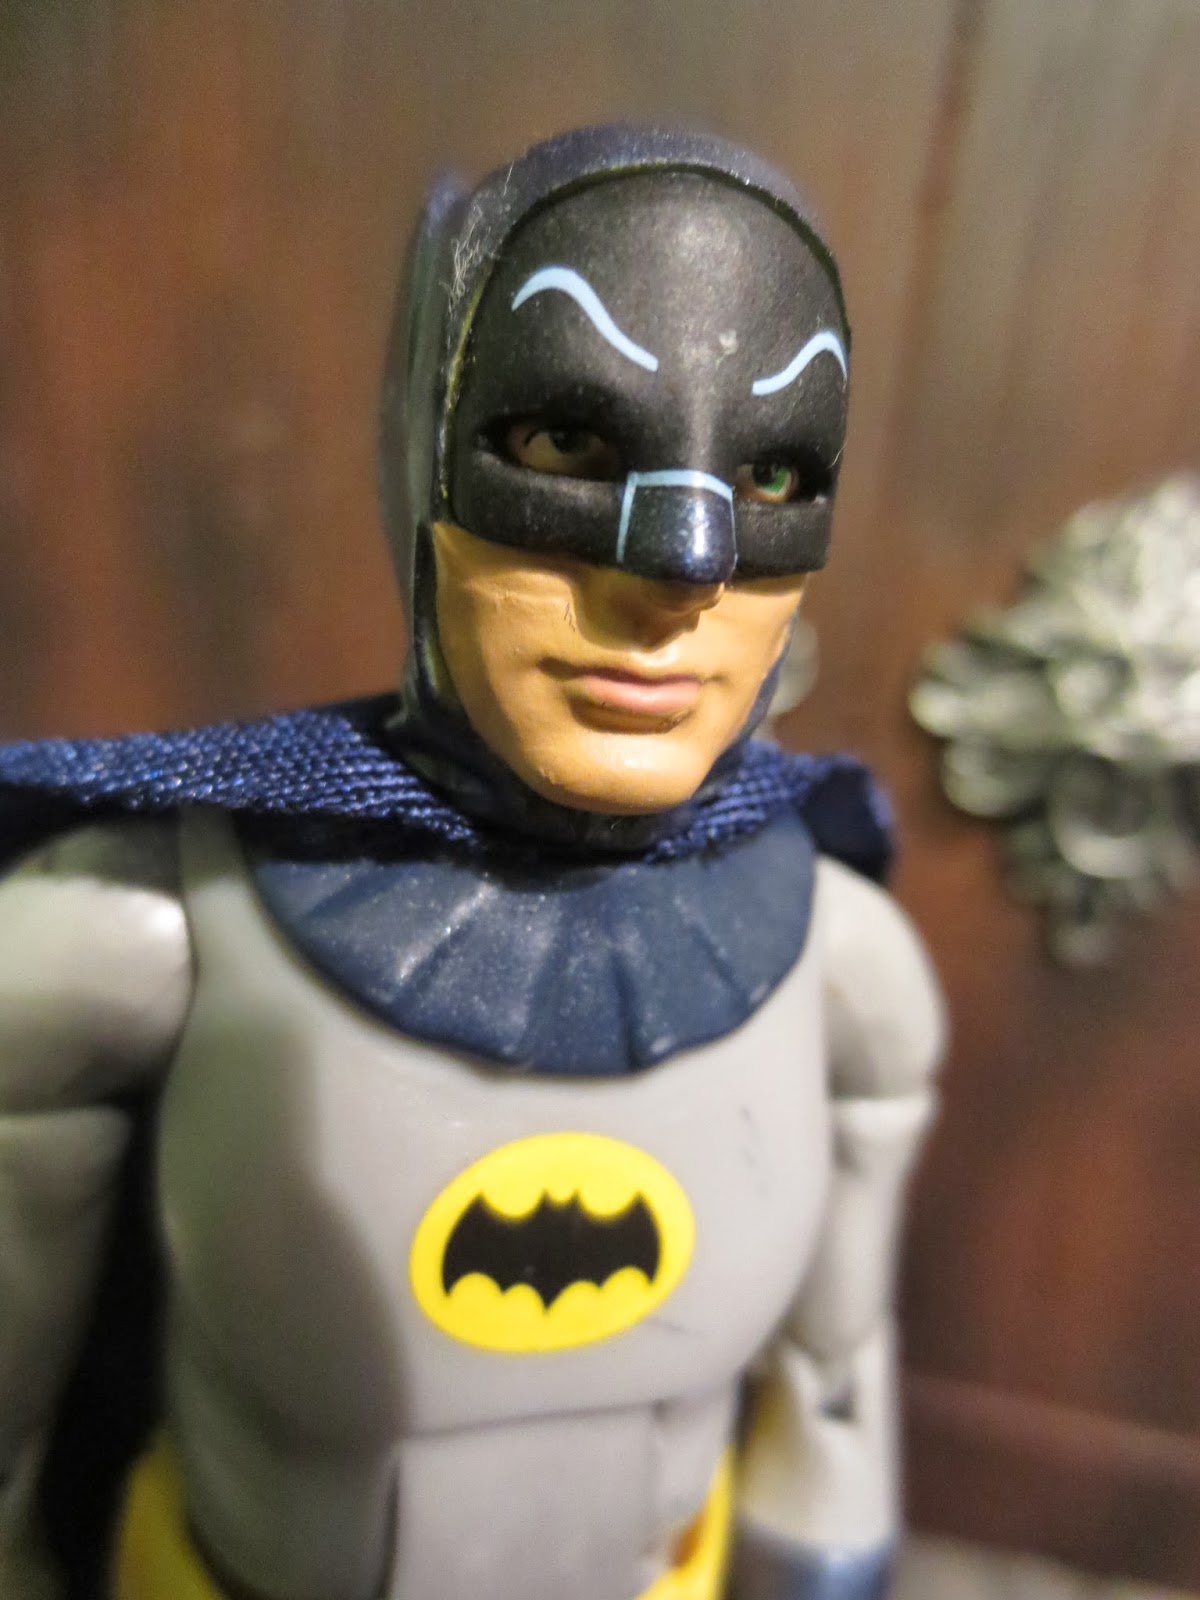 Action Figure Review: Batman from Batman Classic TV Series by Mattel